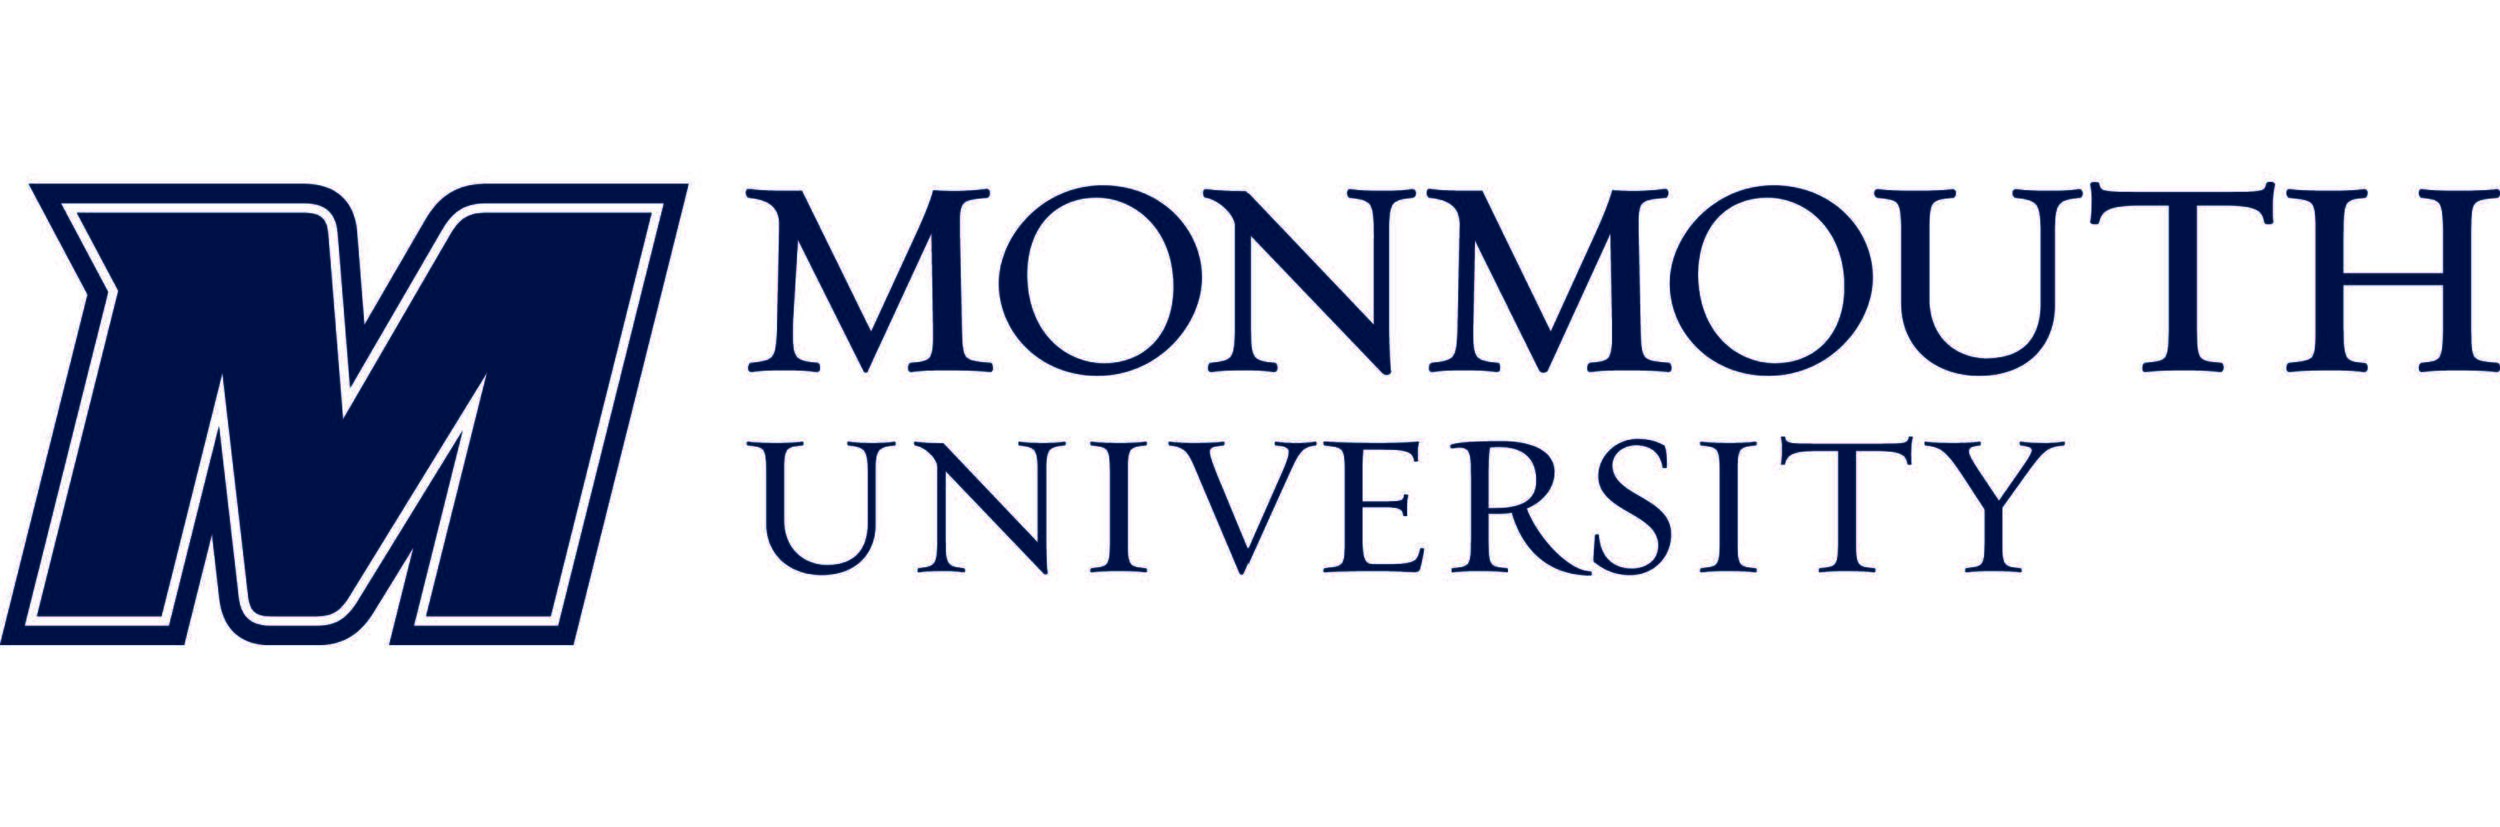 Monmouth-University-Polling-Logo.jpg